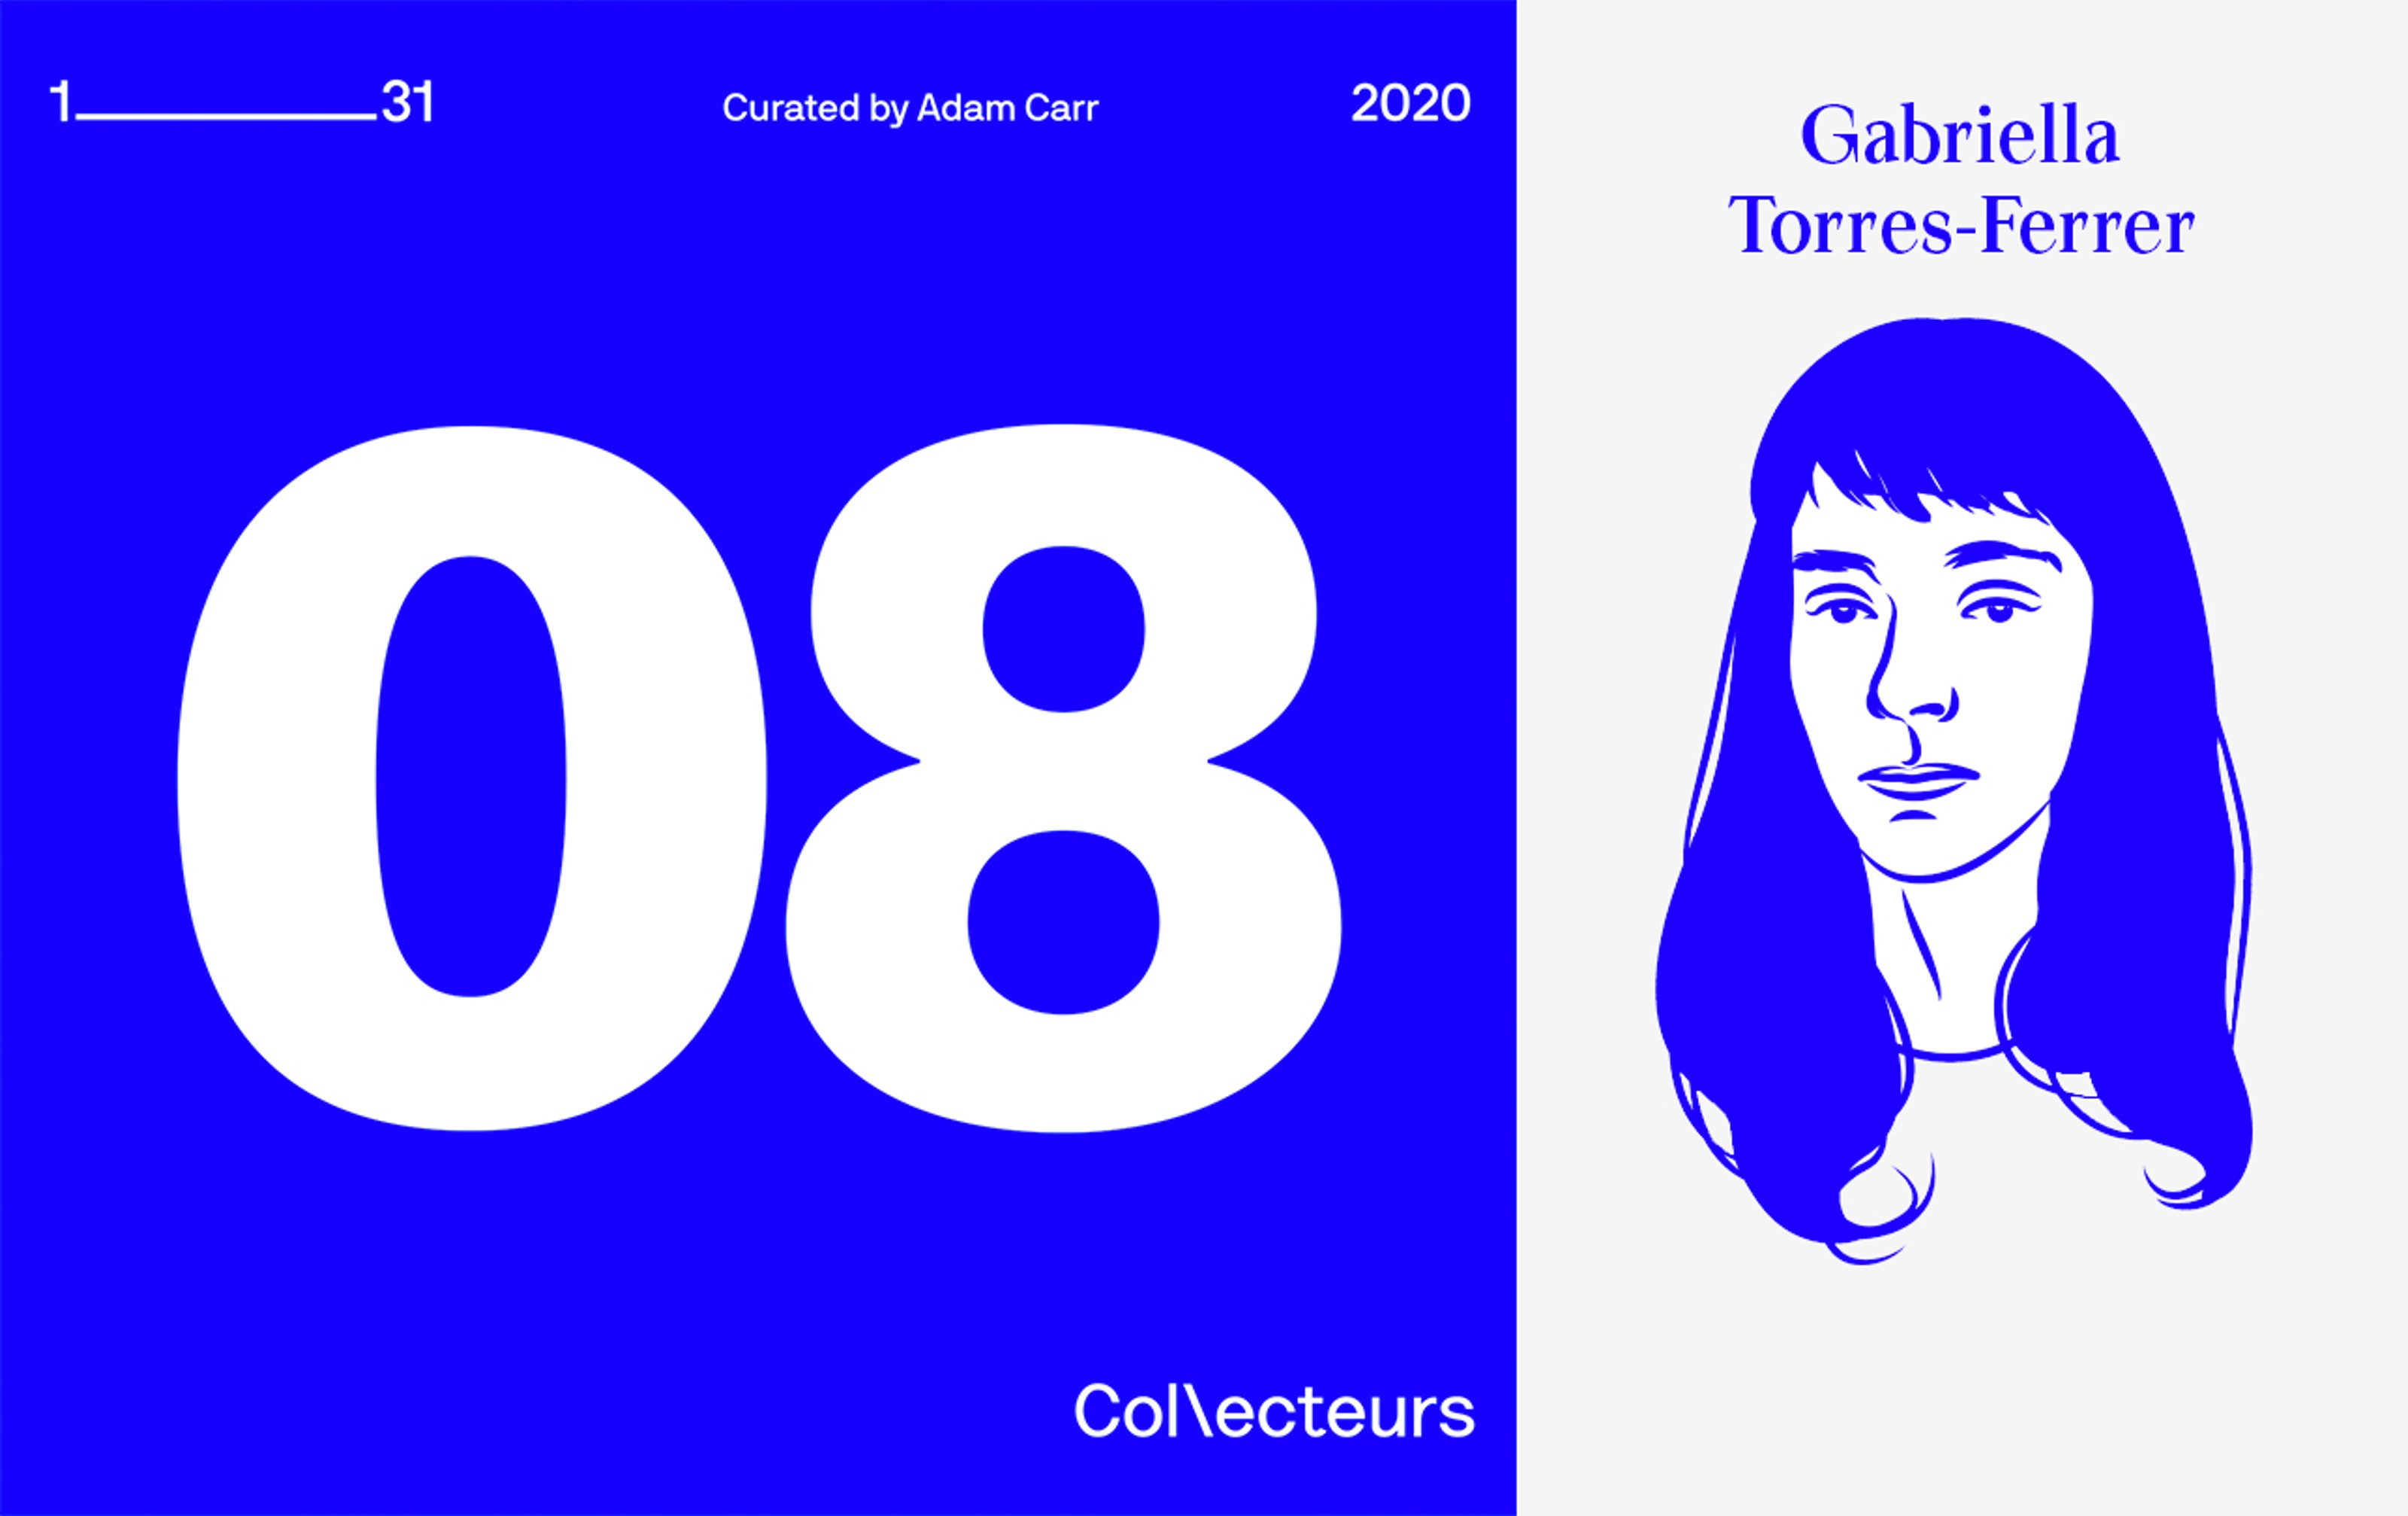 08 - Illustrated portrait of Gabriella Torres-Ferrer